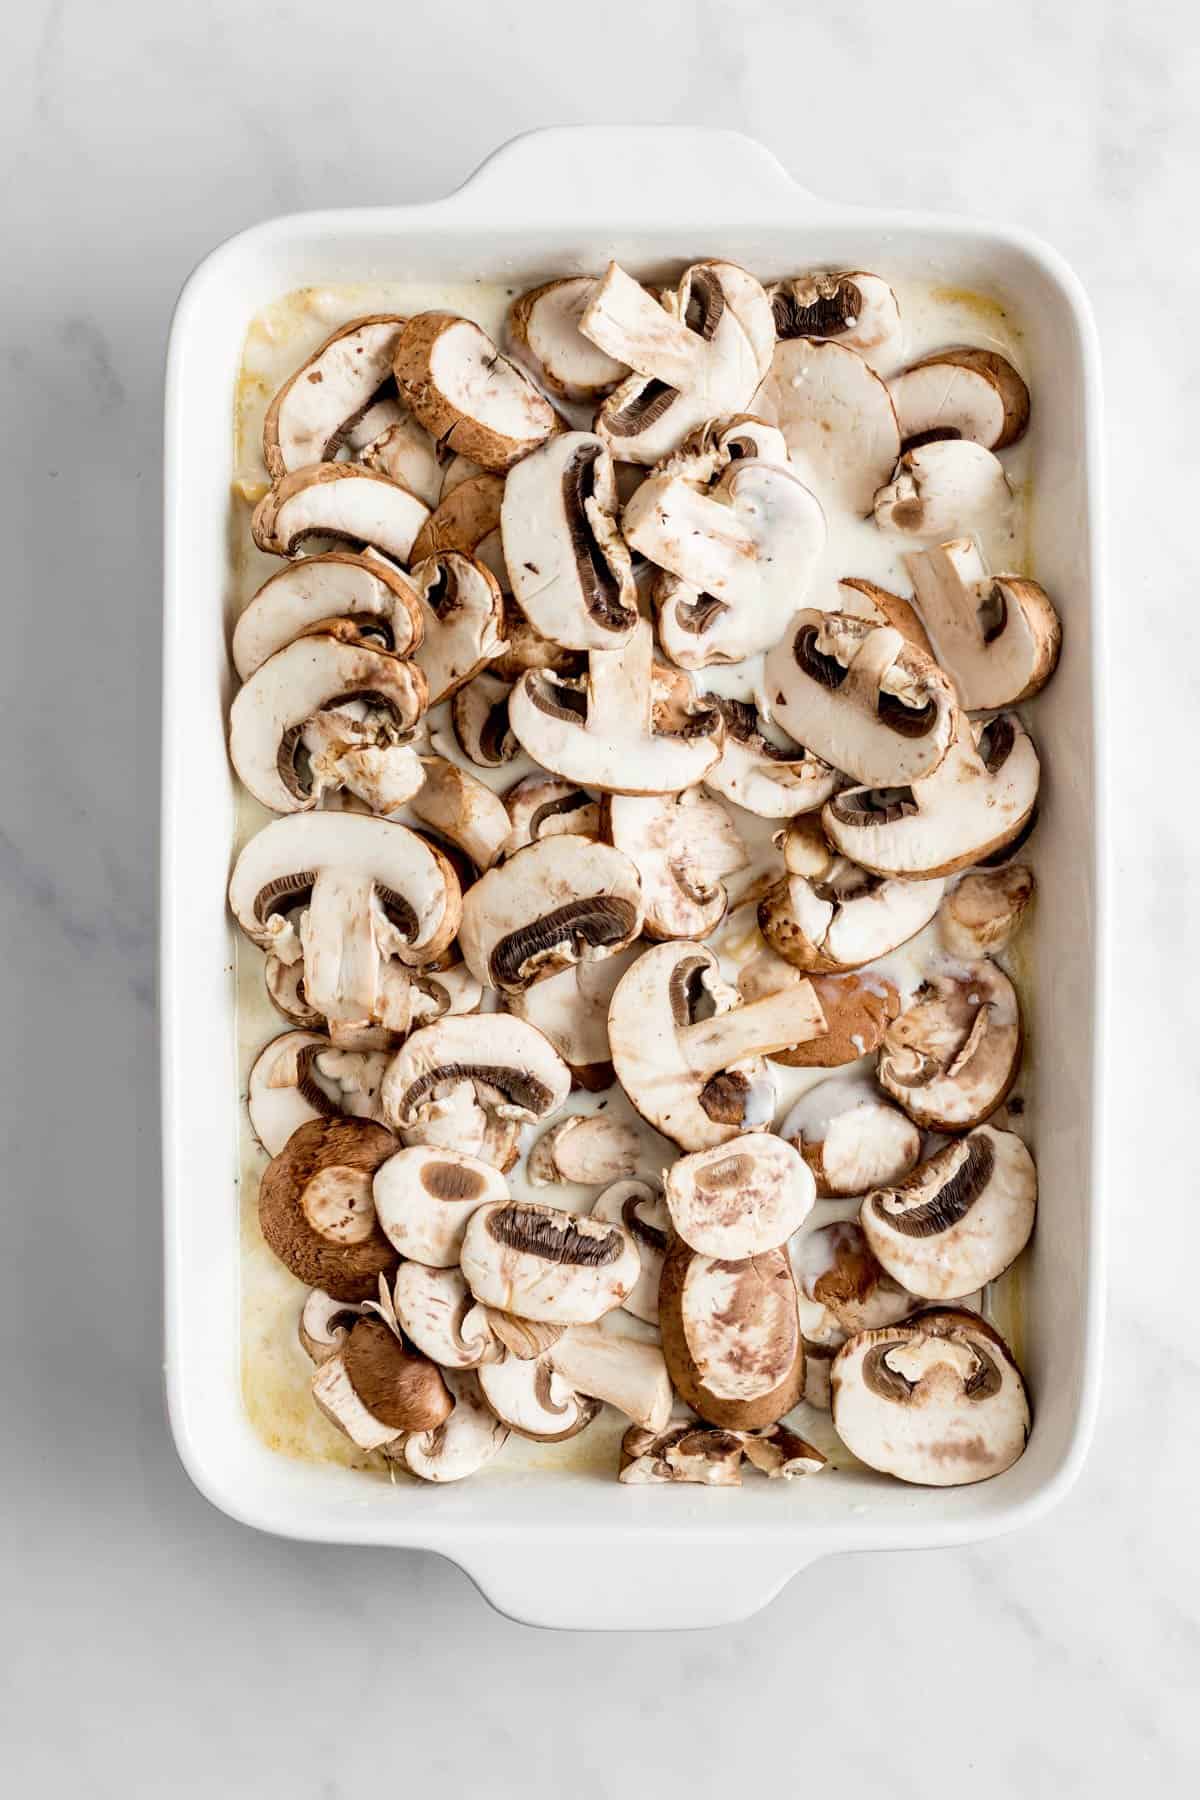 Mushrooms on top of pasta bake before baking.